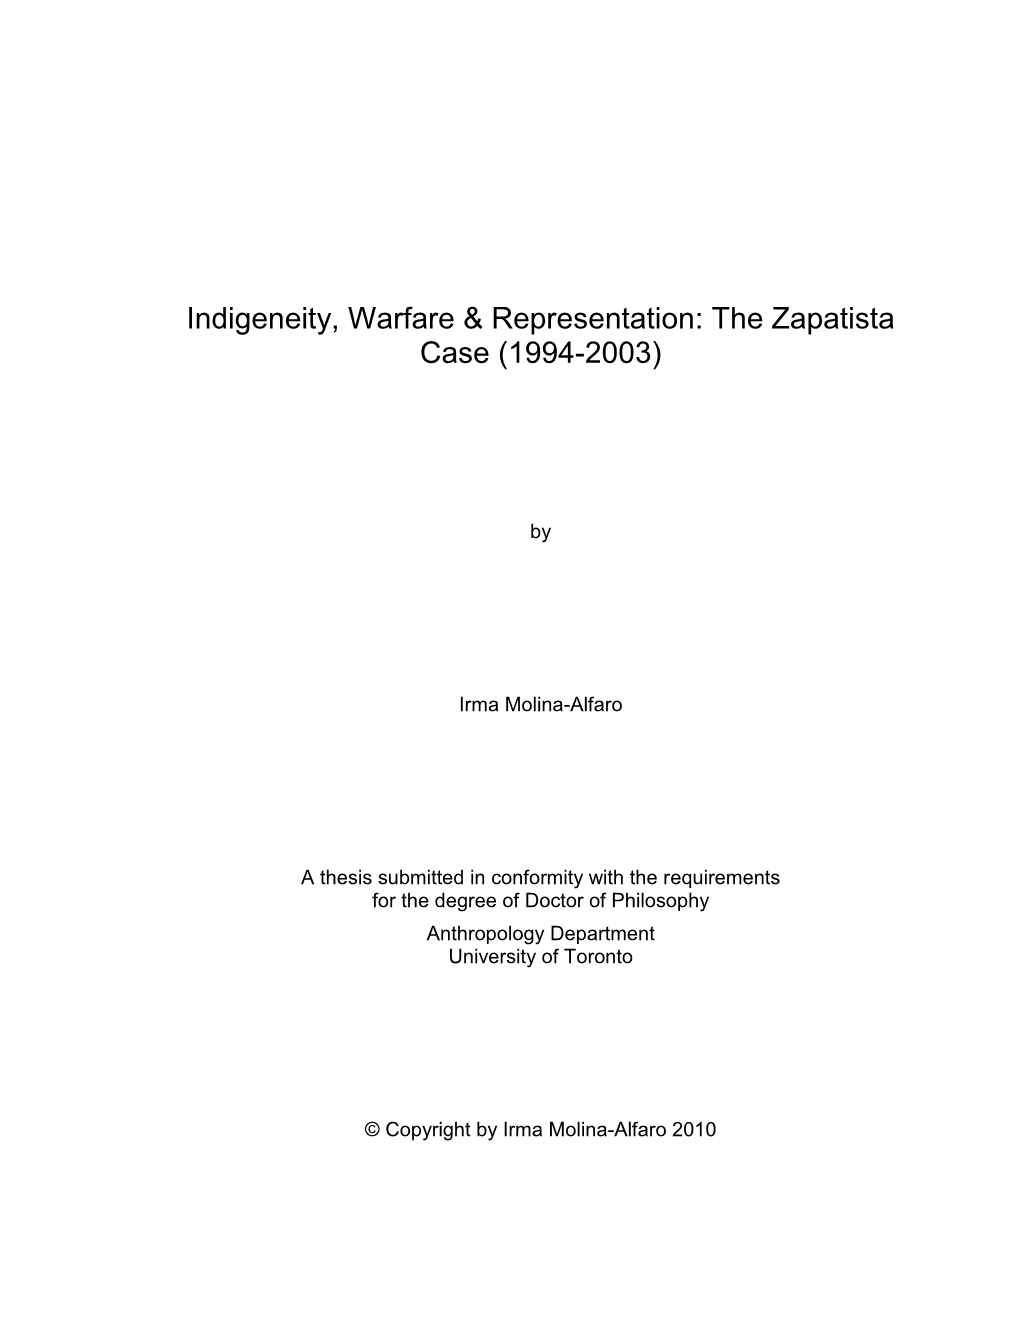 Indigeneity, Warfare & Representation: the Zapatista Case (1994-2003)